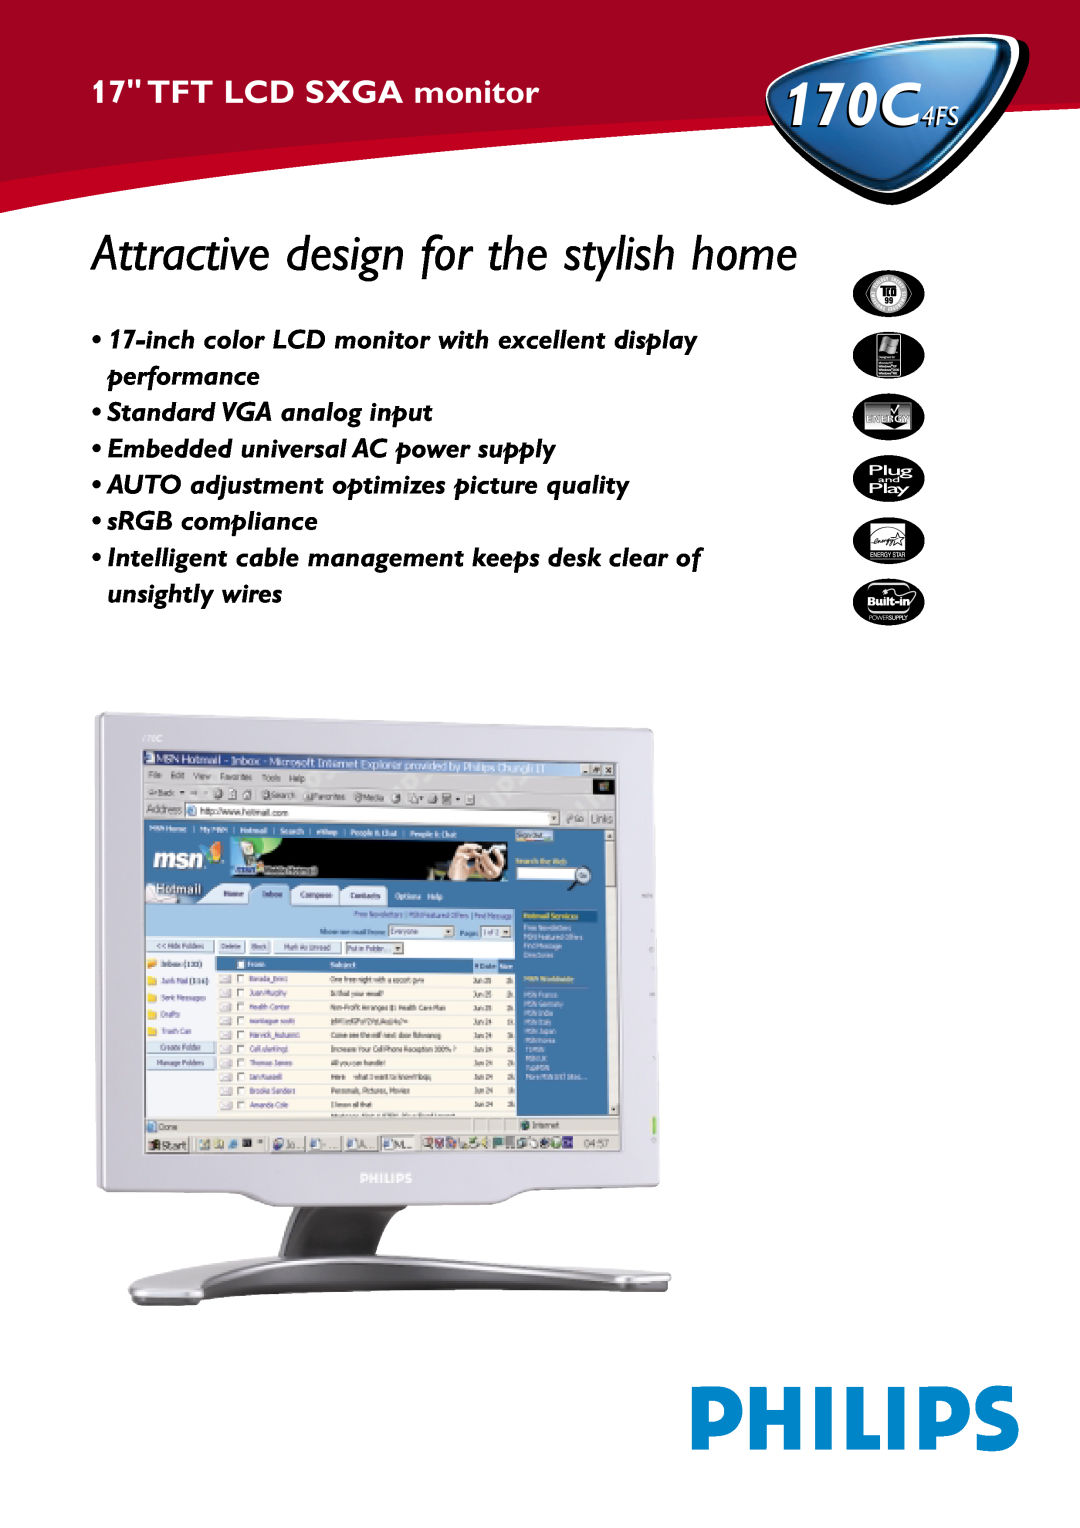 Philips 170C4FS manual Attractive design for the stylish home, TFT LCD SXGA monitor, Standard VGA analog input 